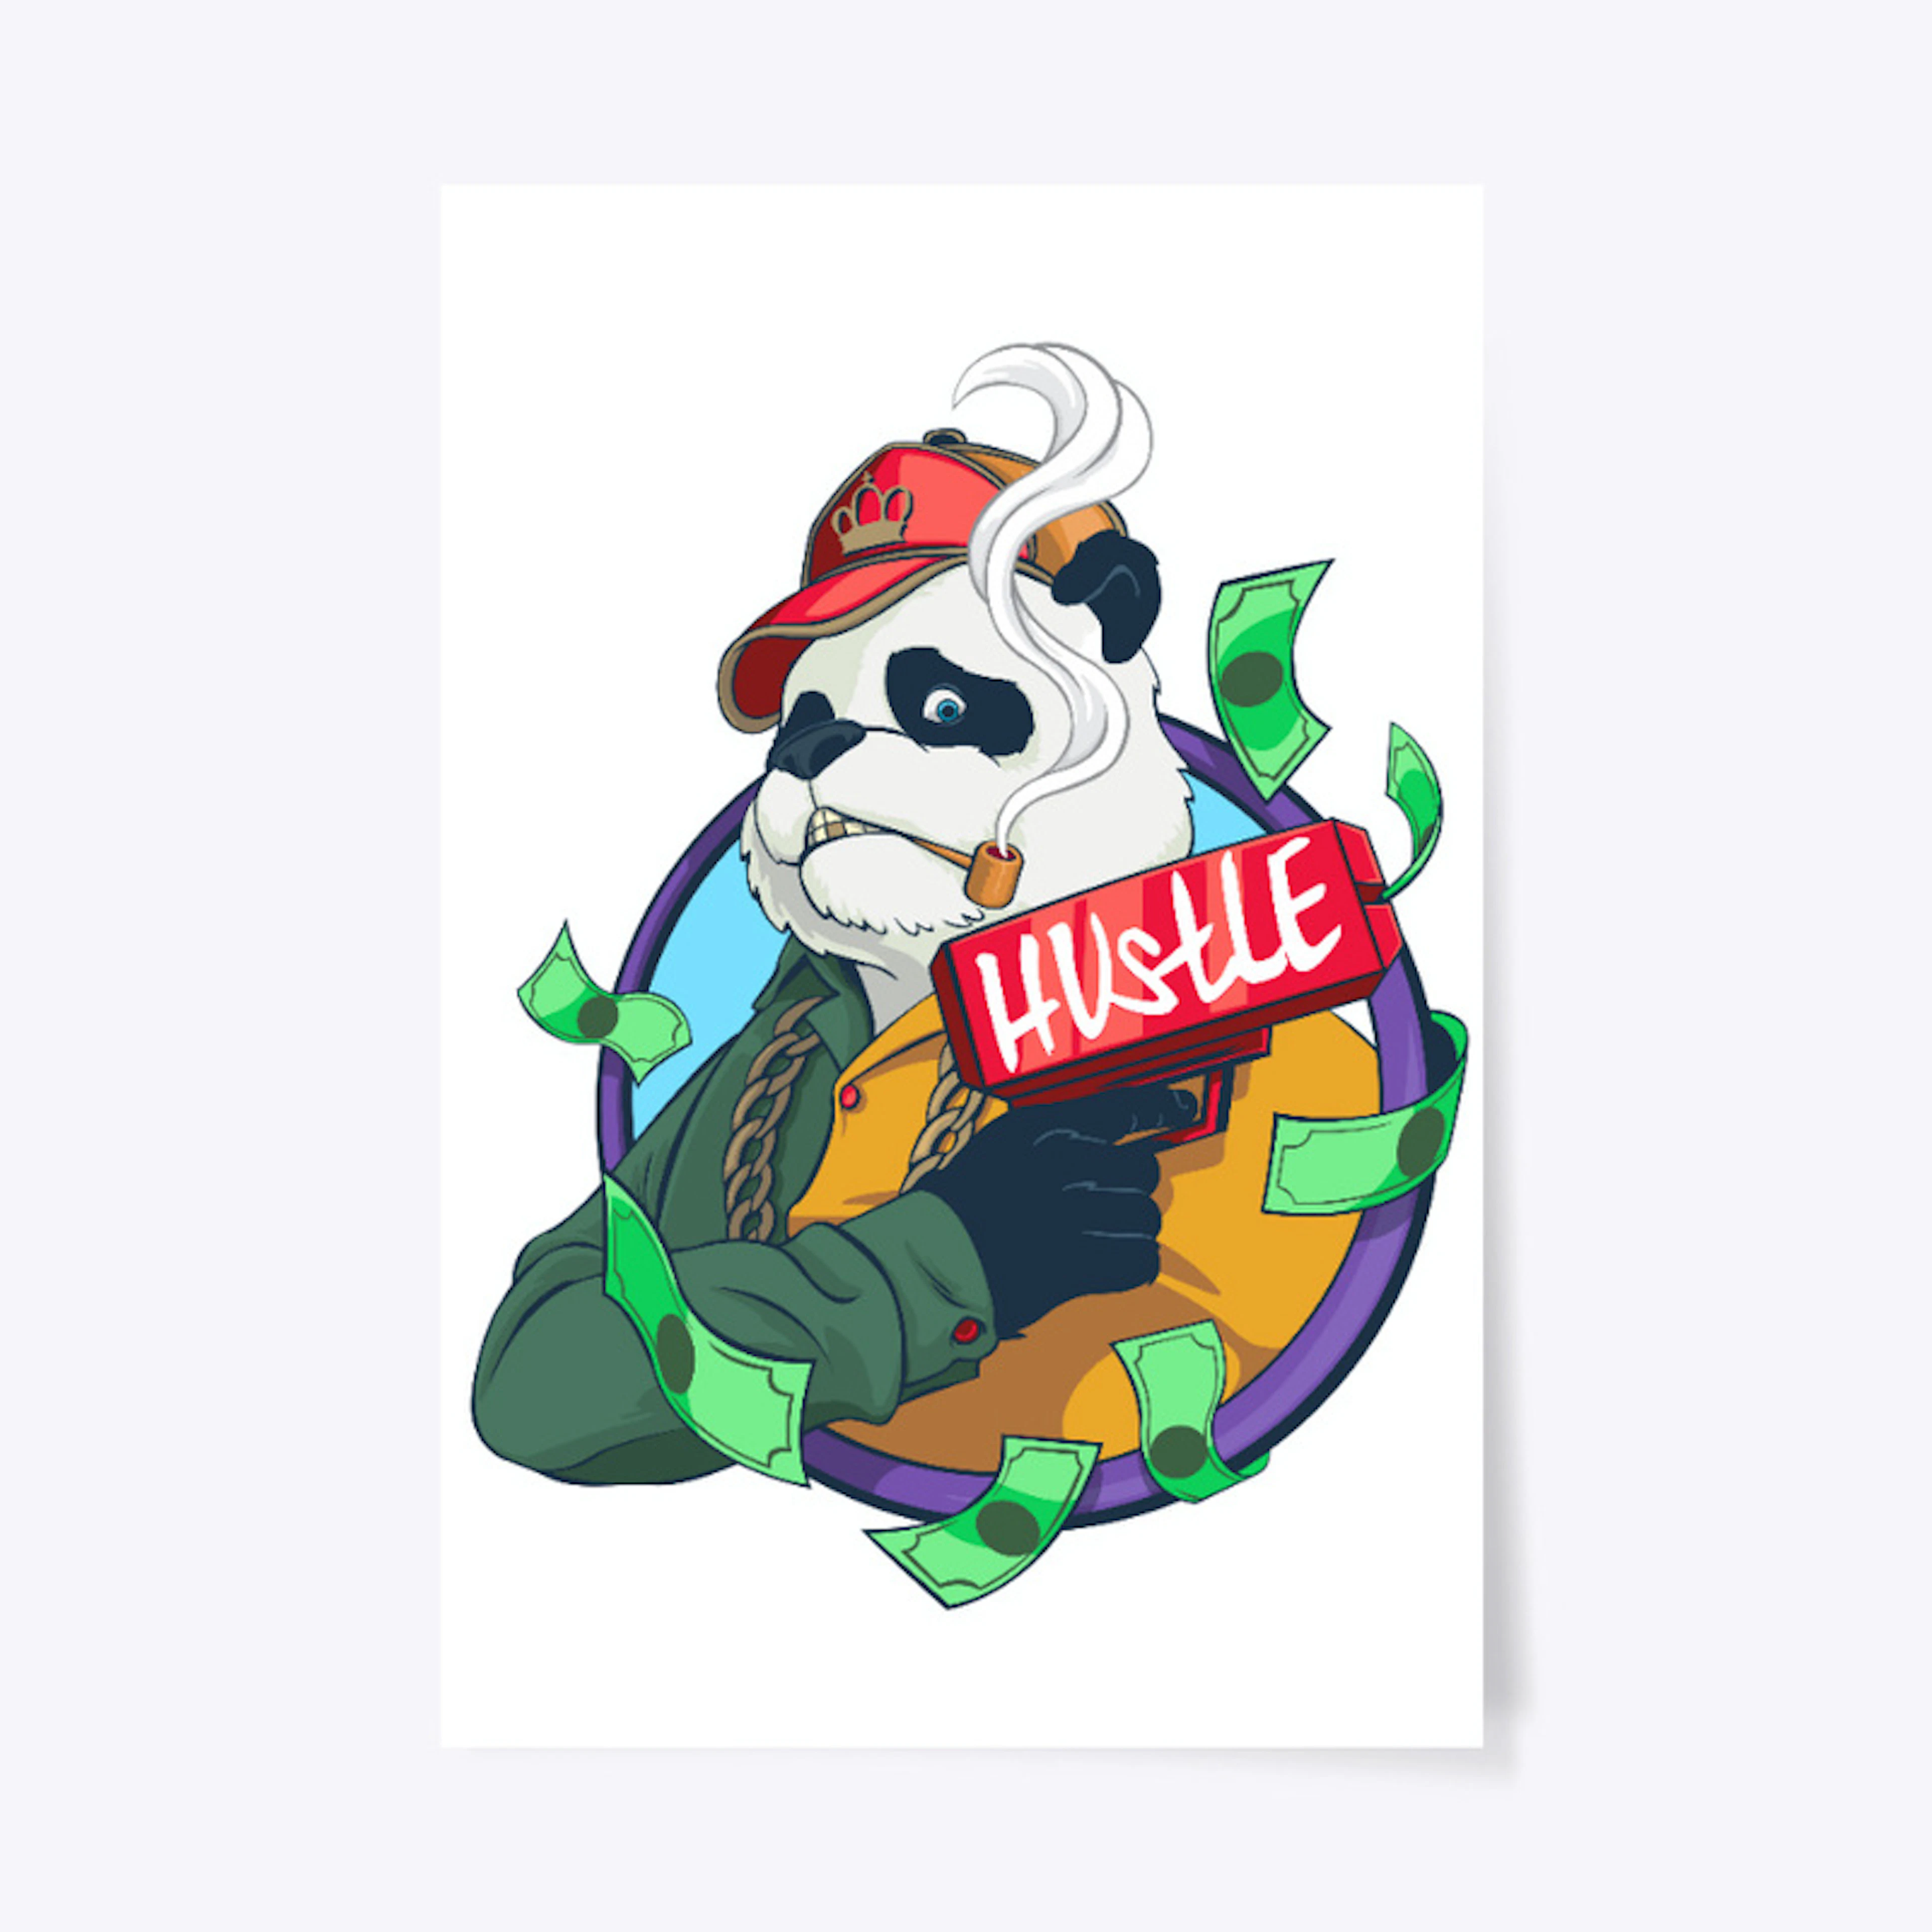 The Hustle Panda Rockin' a Cash Cannon!